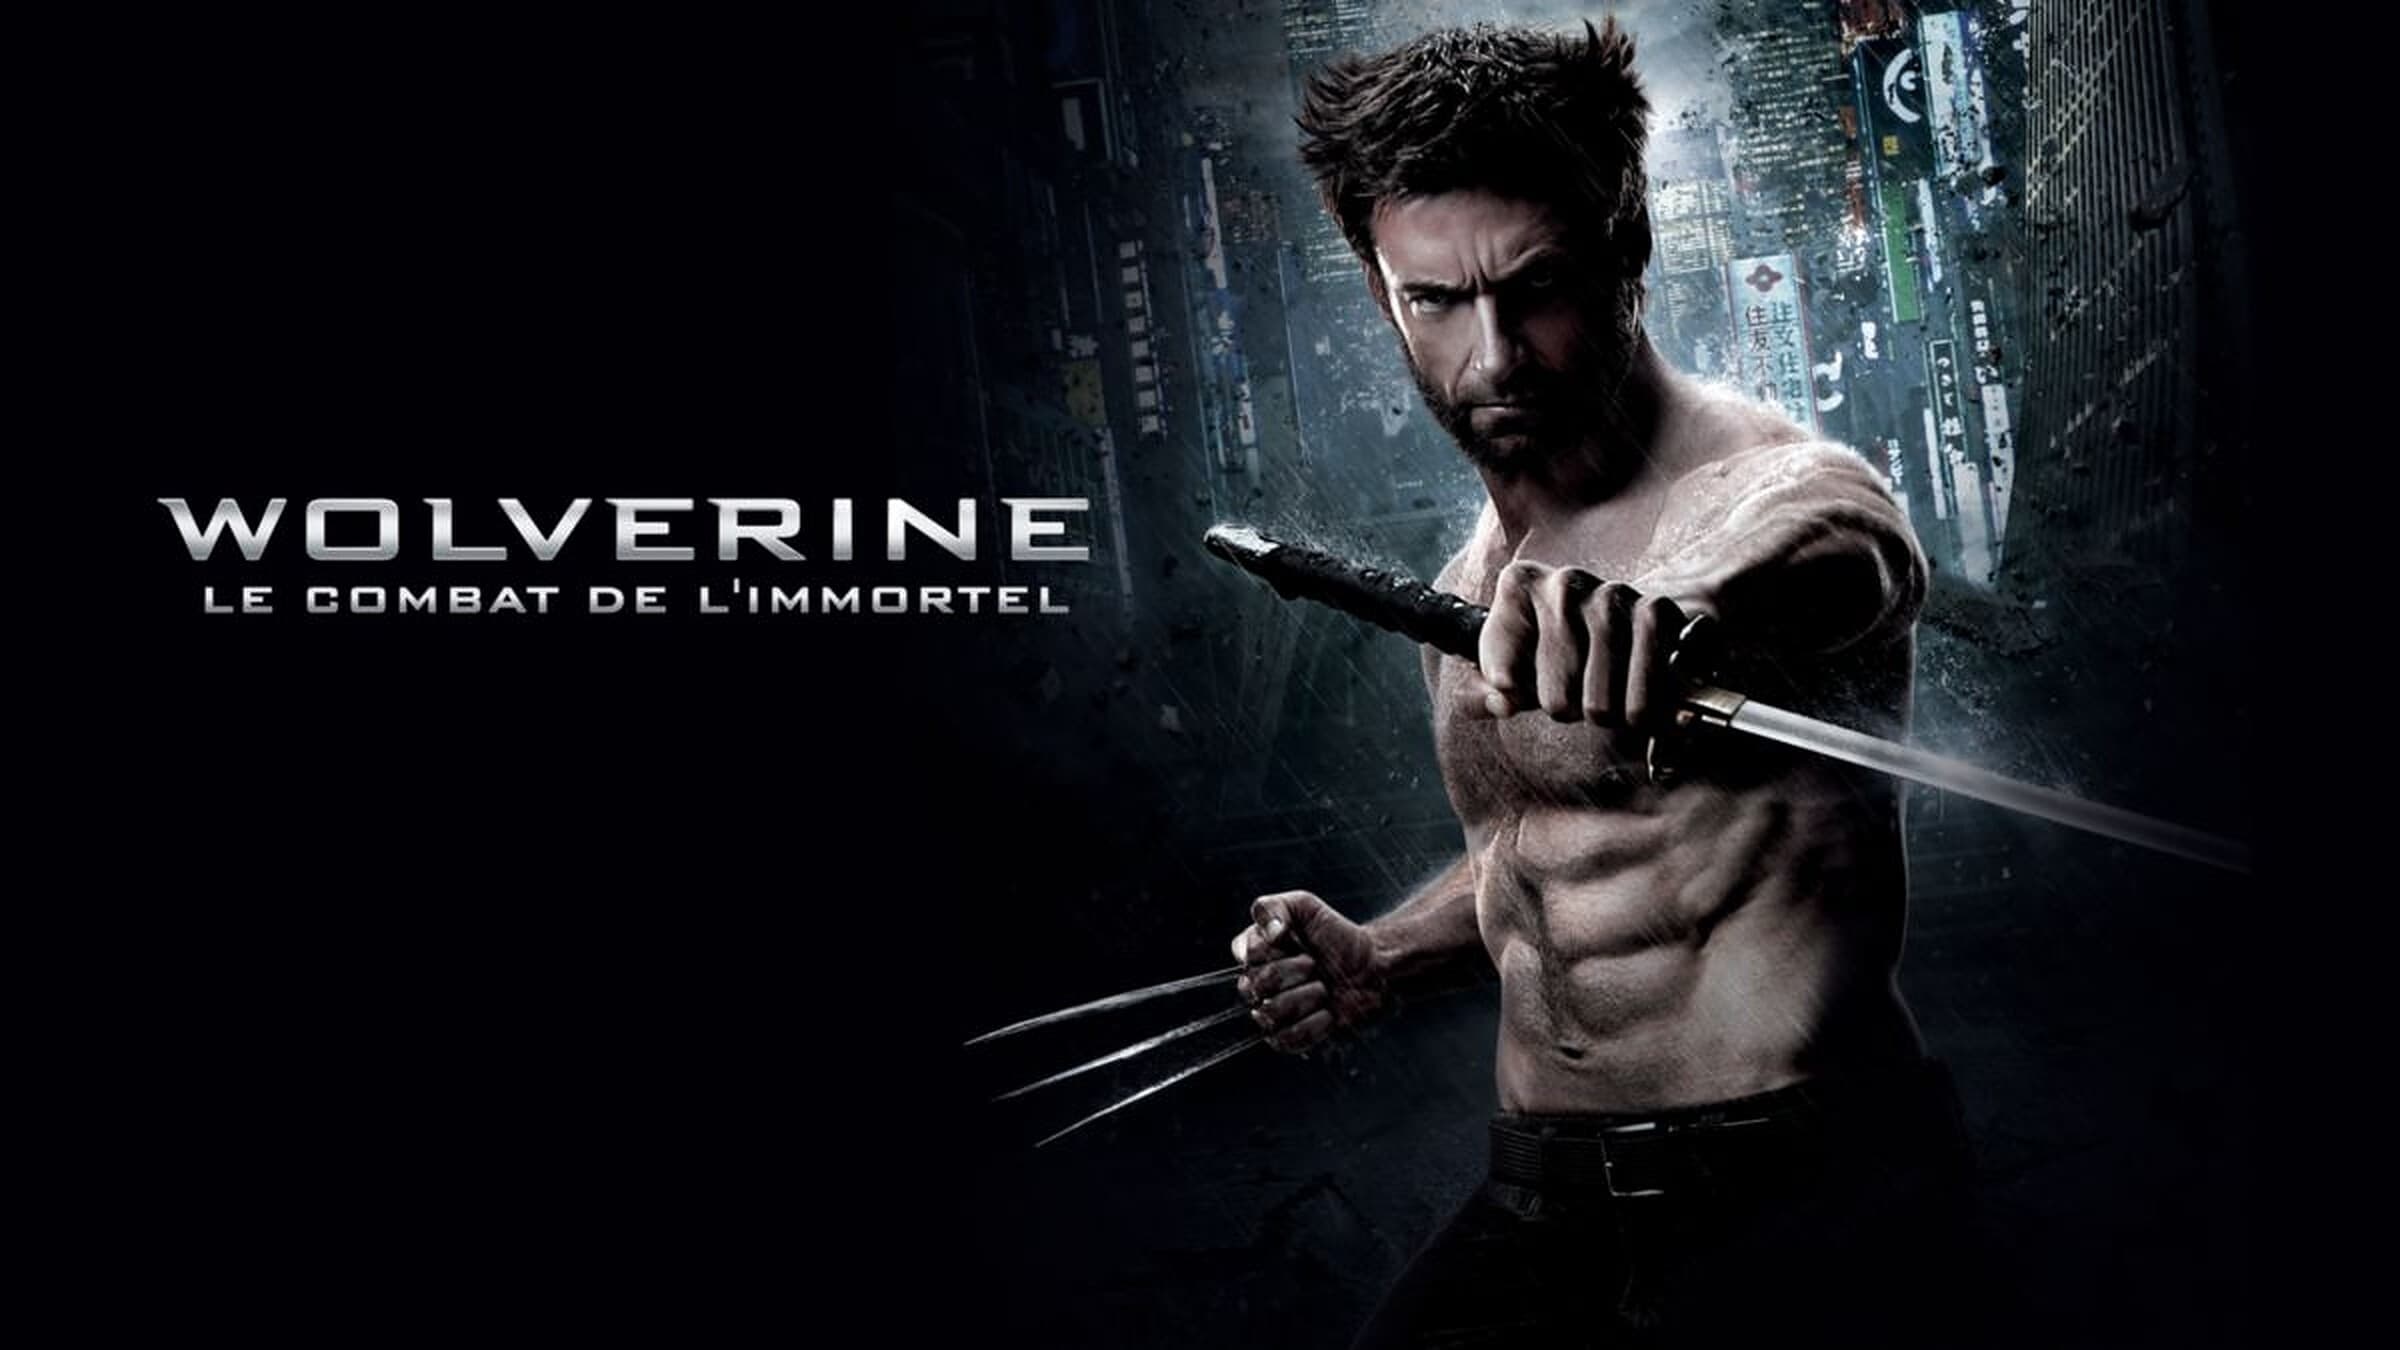 Image du film Wolverine : le combat de l'immortel se5k73fs2oeybnu7gtsxhkvpxfmjpg